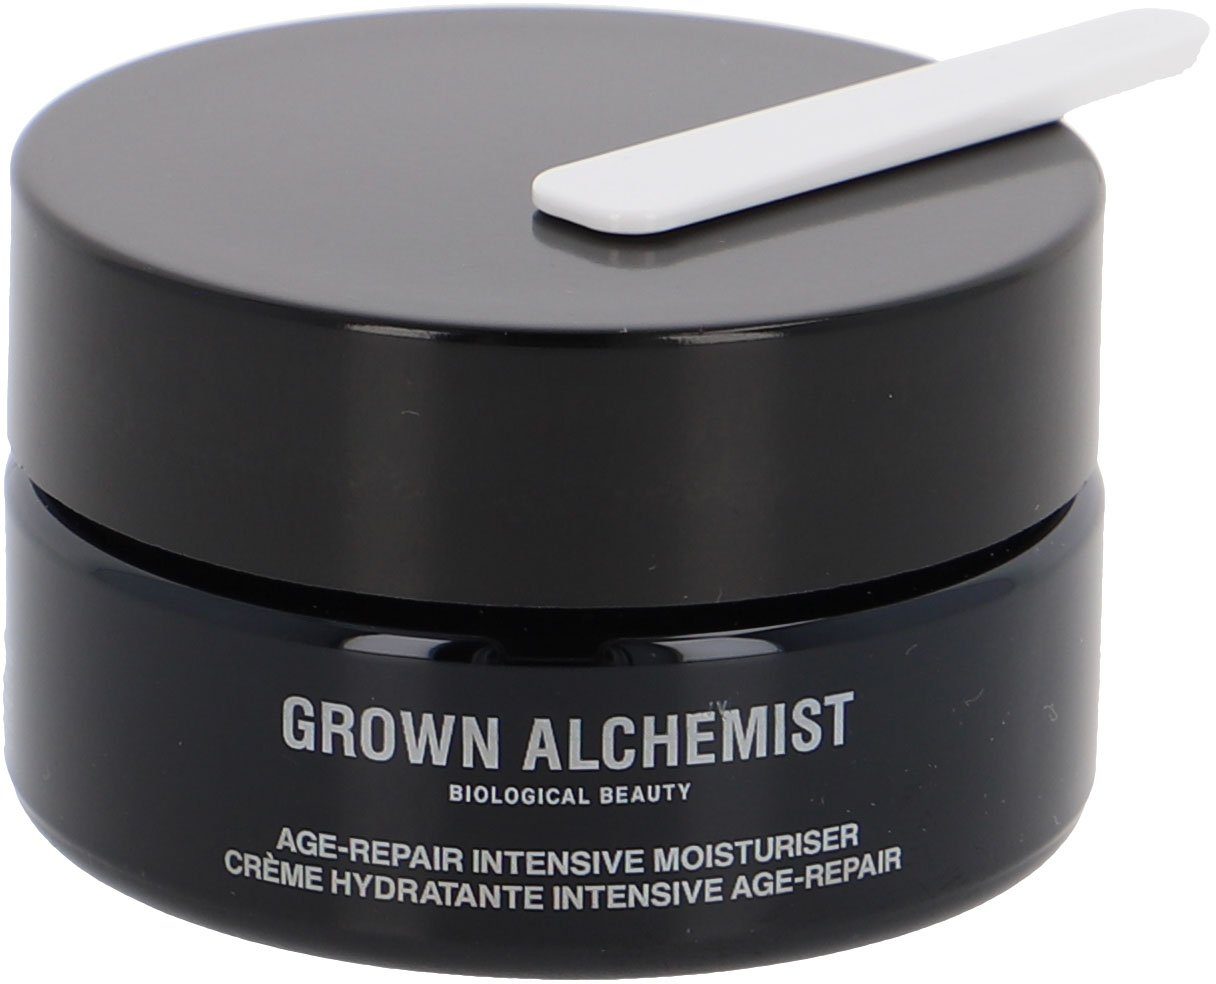 GROWN ALCHEMIST Anti-Aging-Creme Age-Repair Intensive Tea Gesichtspflege Extract, Phyto-Peptide, Moisturiser, White